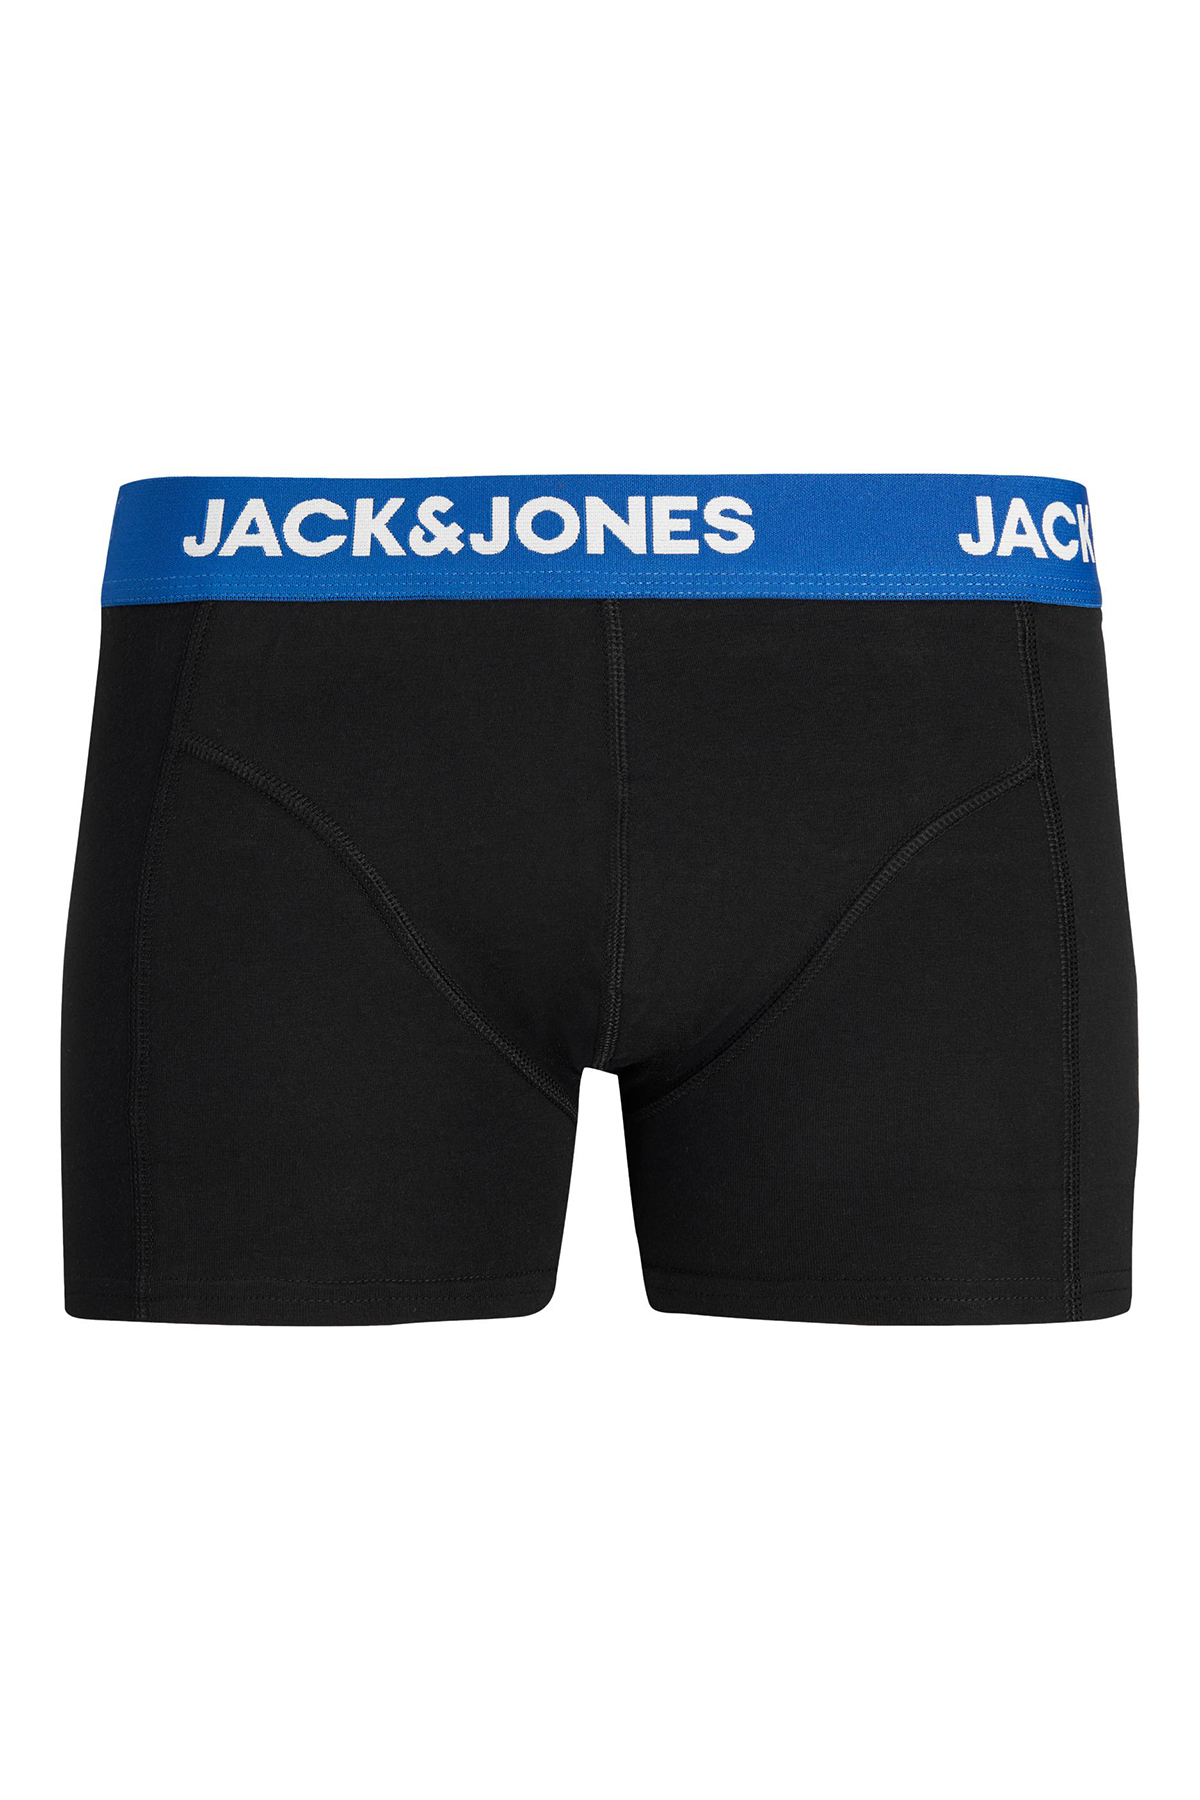 Jack & Jones Erkek Boxer 12228467 SİYAH 200923019 | Flo